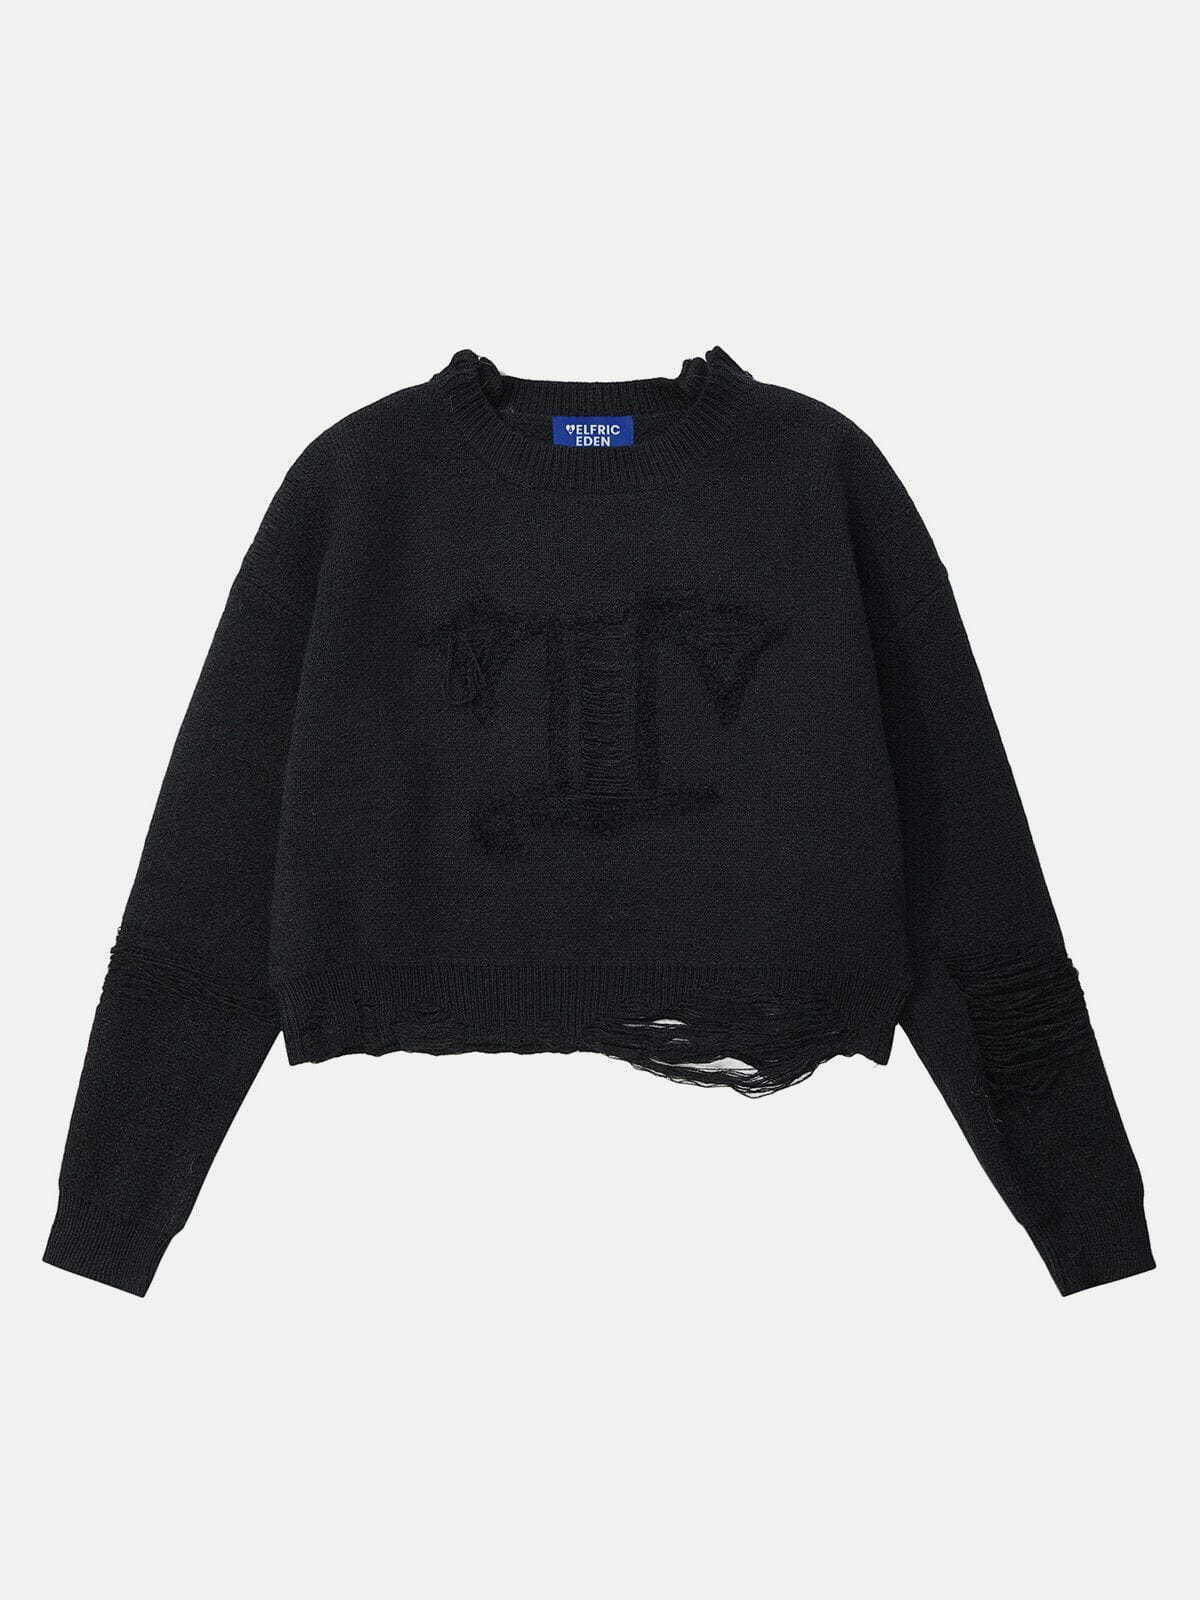 edgy distressed zip up sweatshirt urban fashion trend 7171